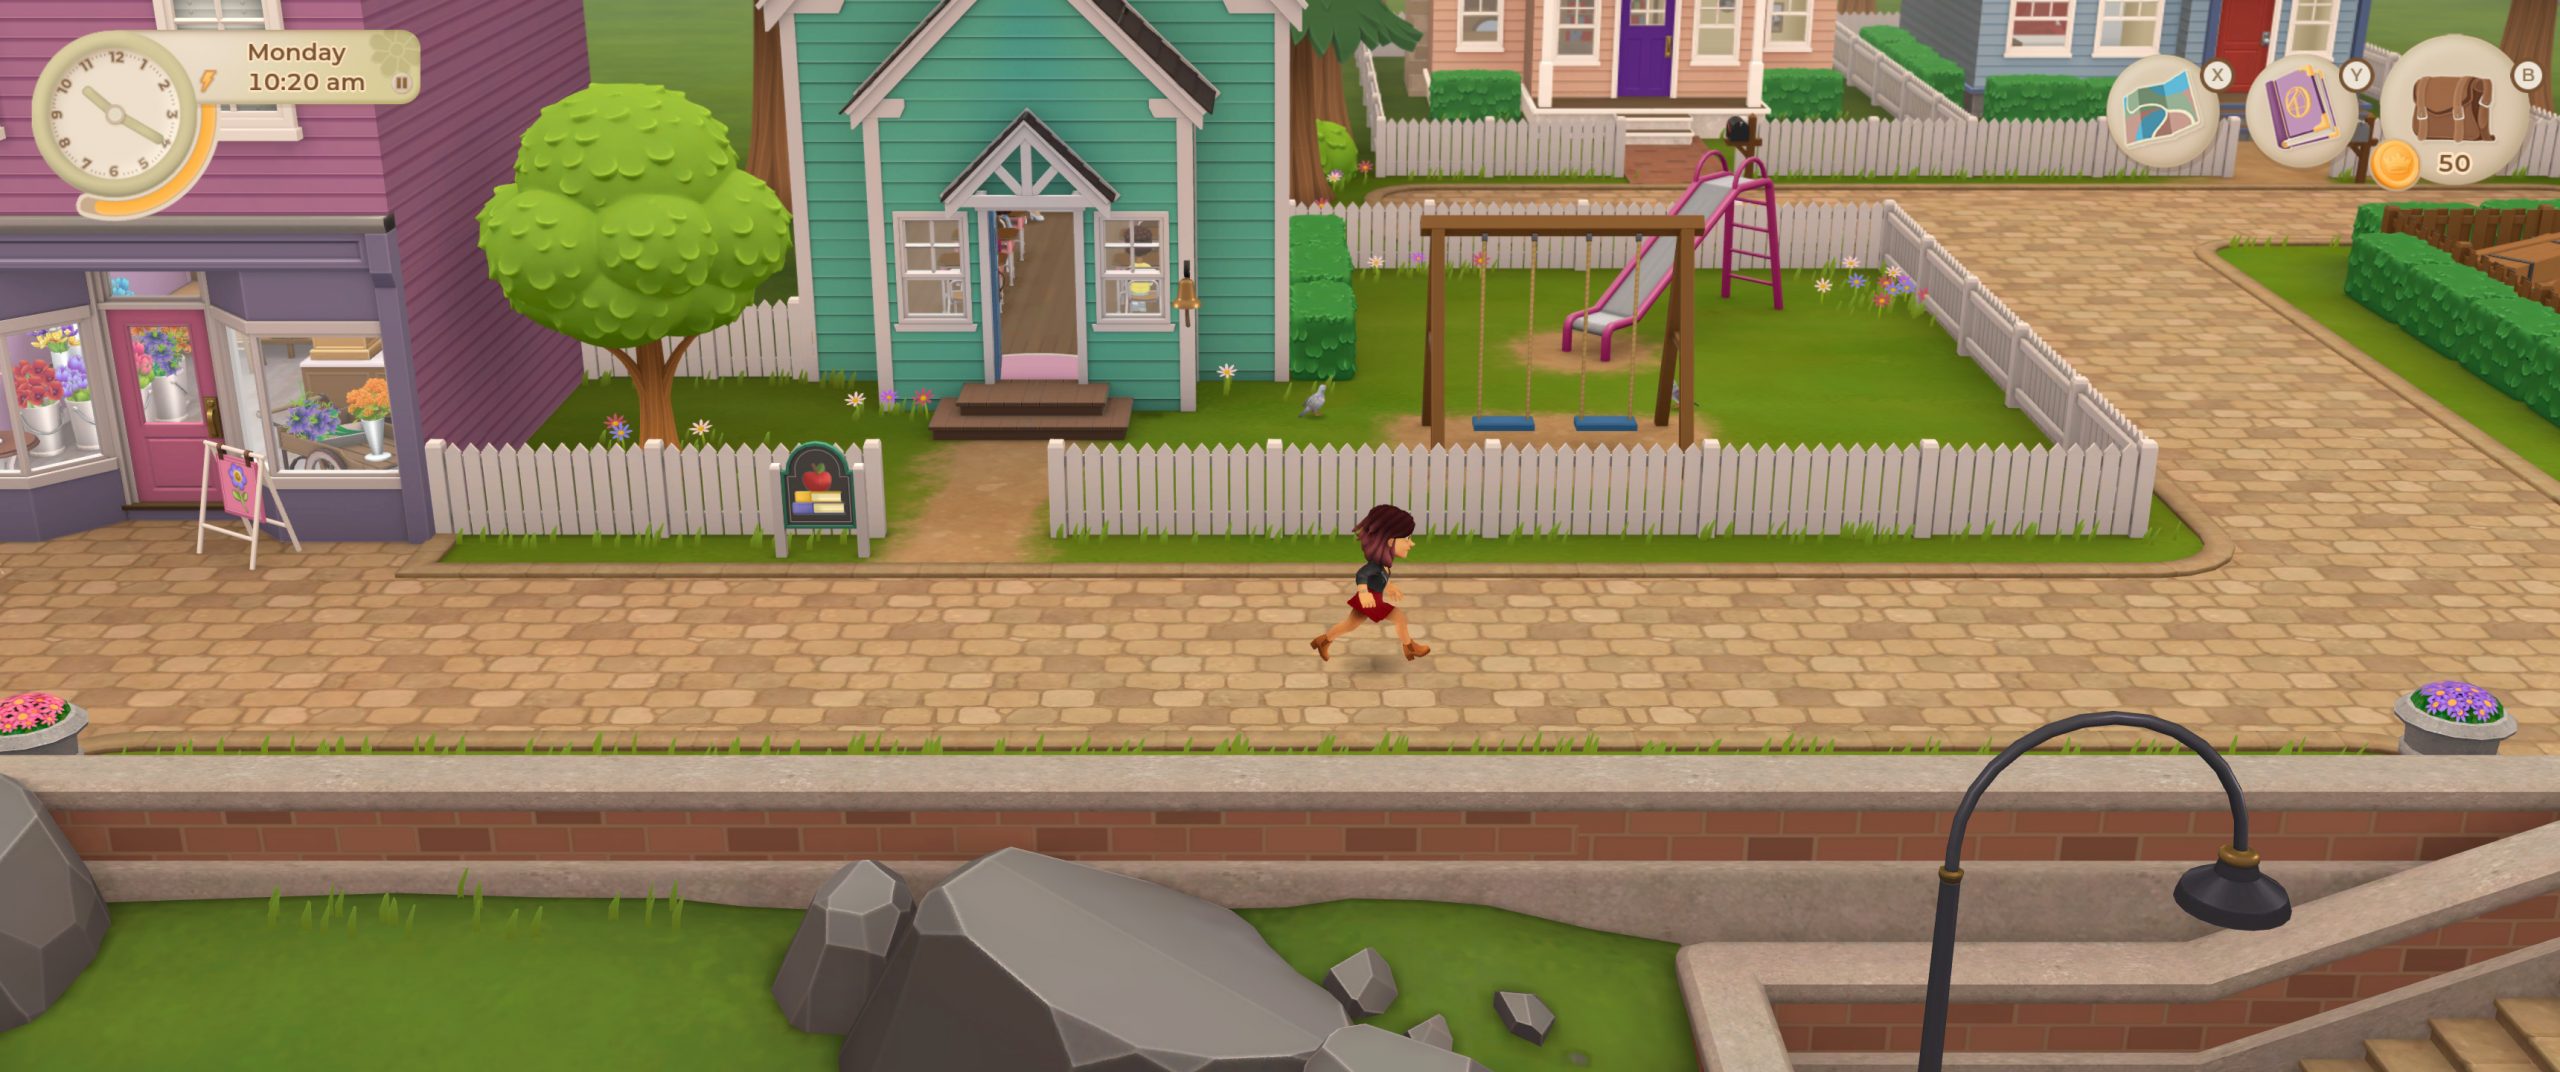 A screenshot from Wylde Flowers. Tara is running through the town.